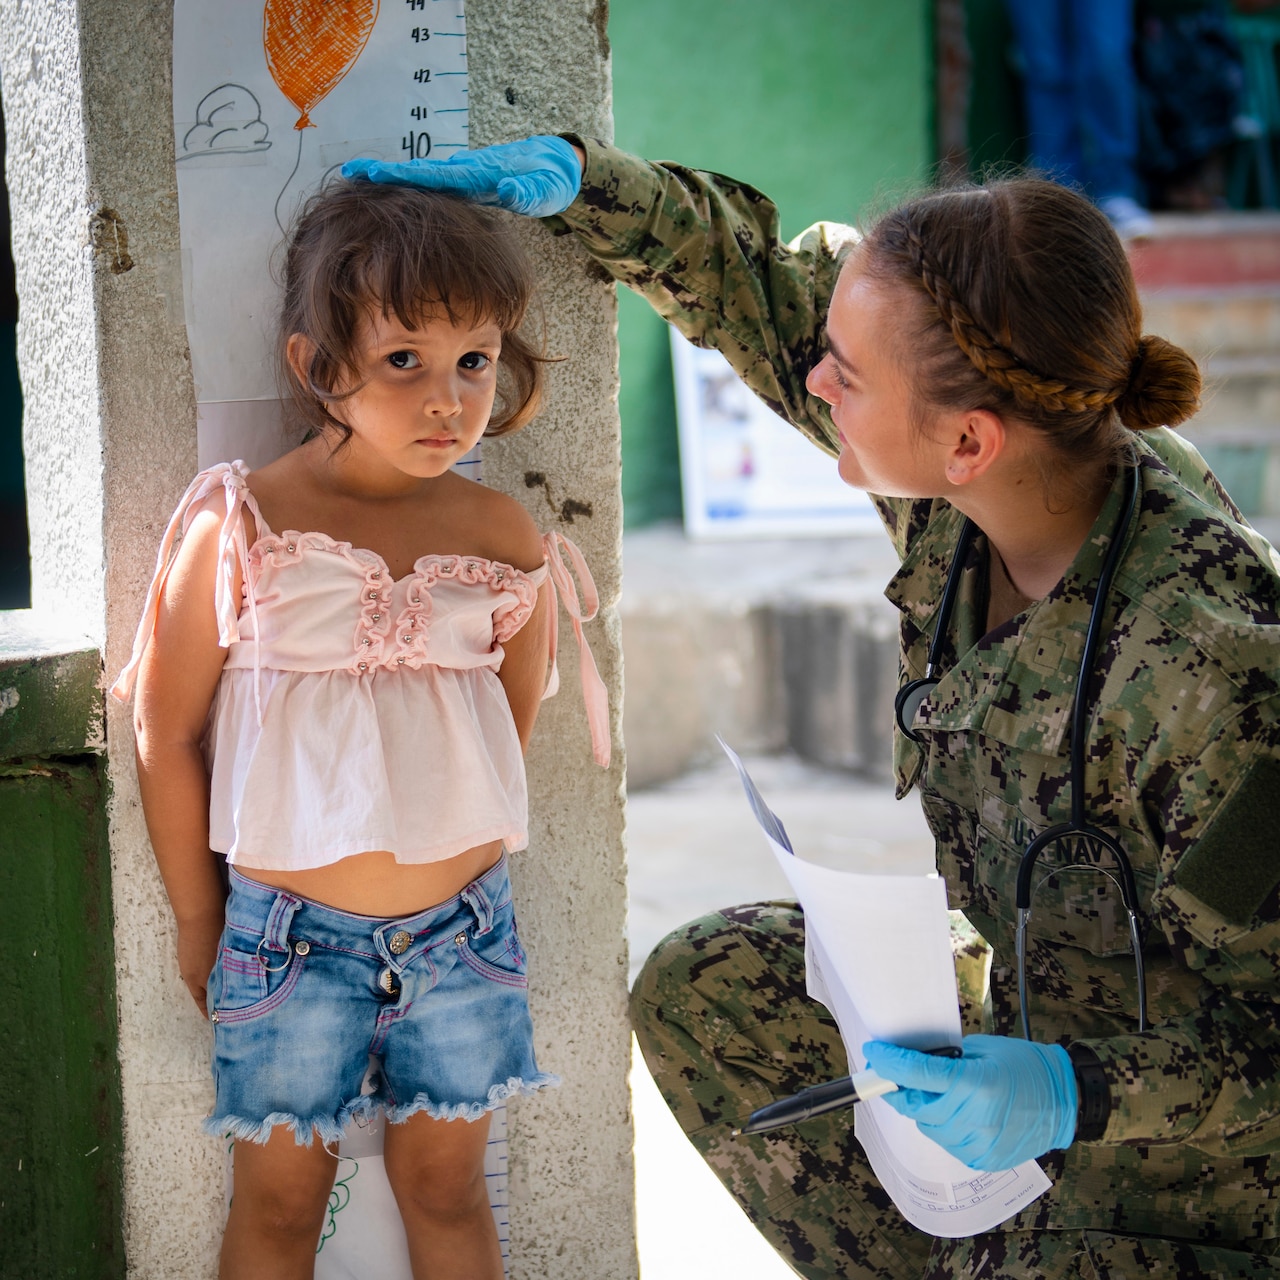 A sailor measures a girl's height.